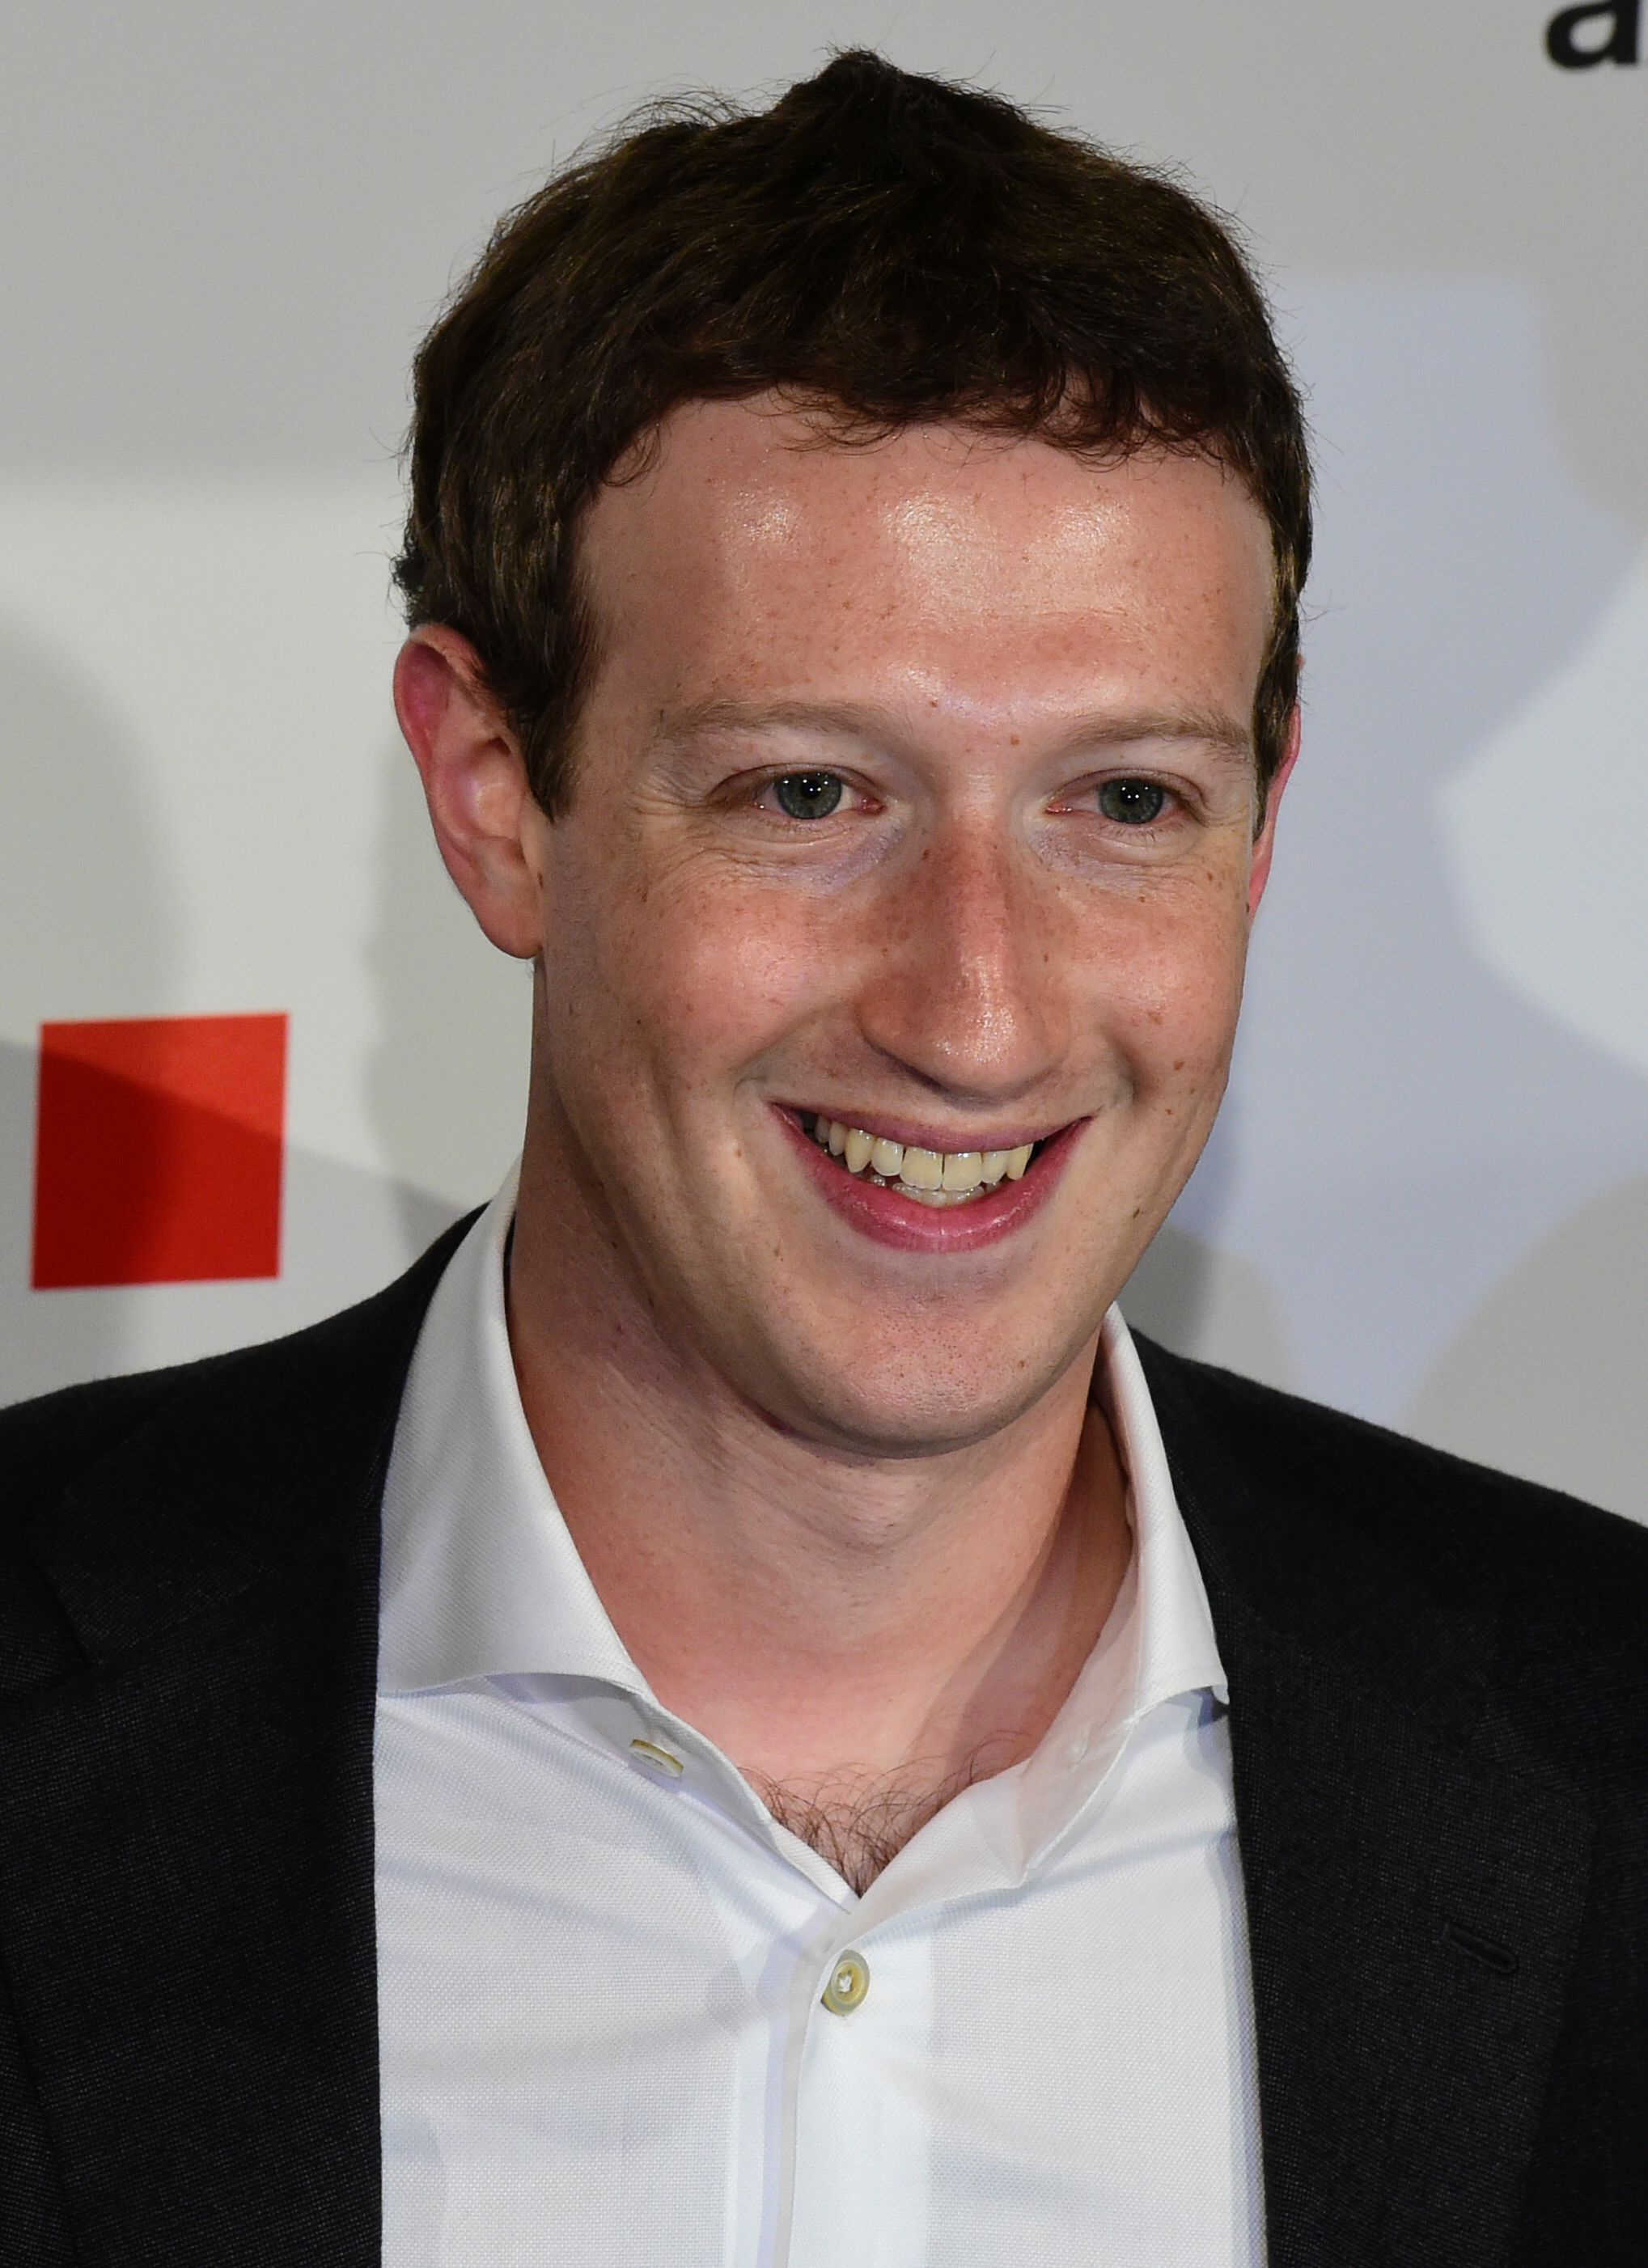 Mark Zuckerberg: Age, Net Worth, Family, and Facebook History